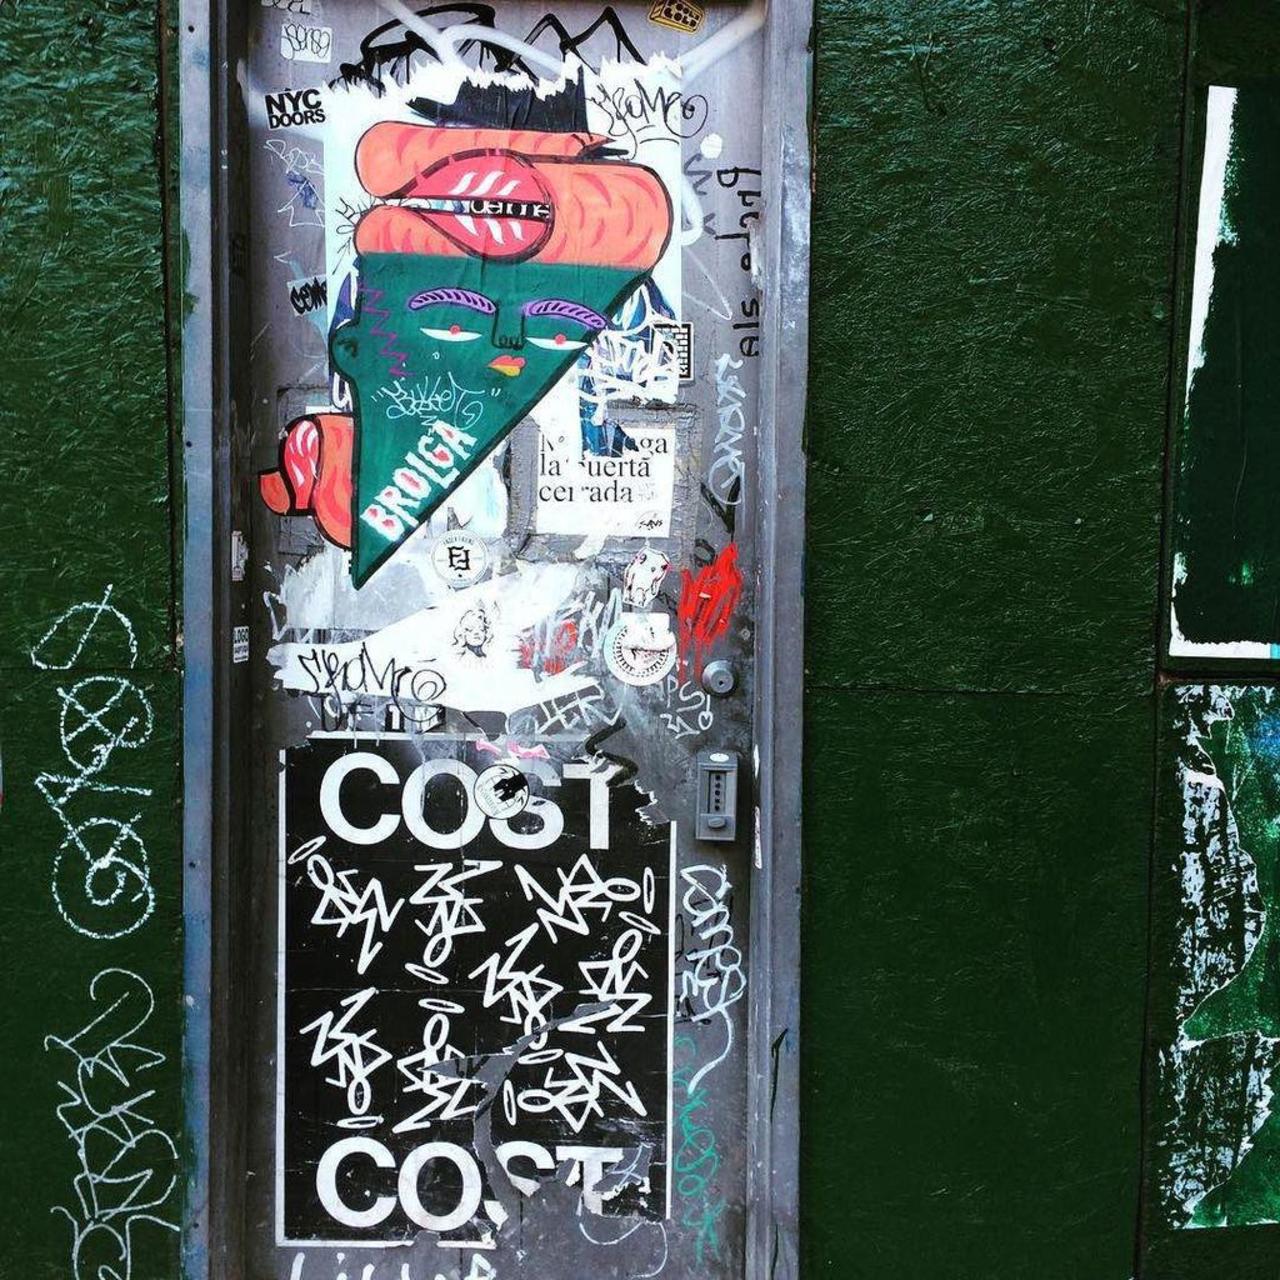 #nyctags #nycgraffiti #nycstreetart #nycgraffart #graffiti #graffitiwalls #tags #streetart #streetartnyc #instagraf… http://t.co/nAKdd1bQN9